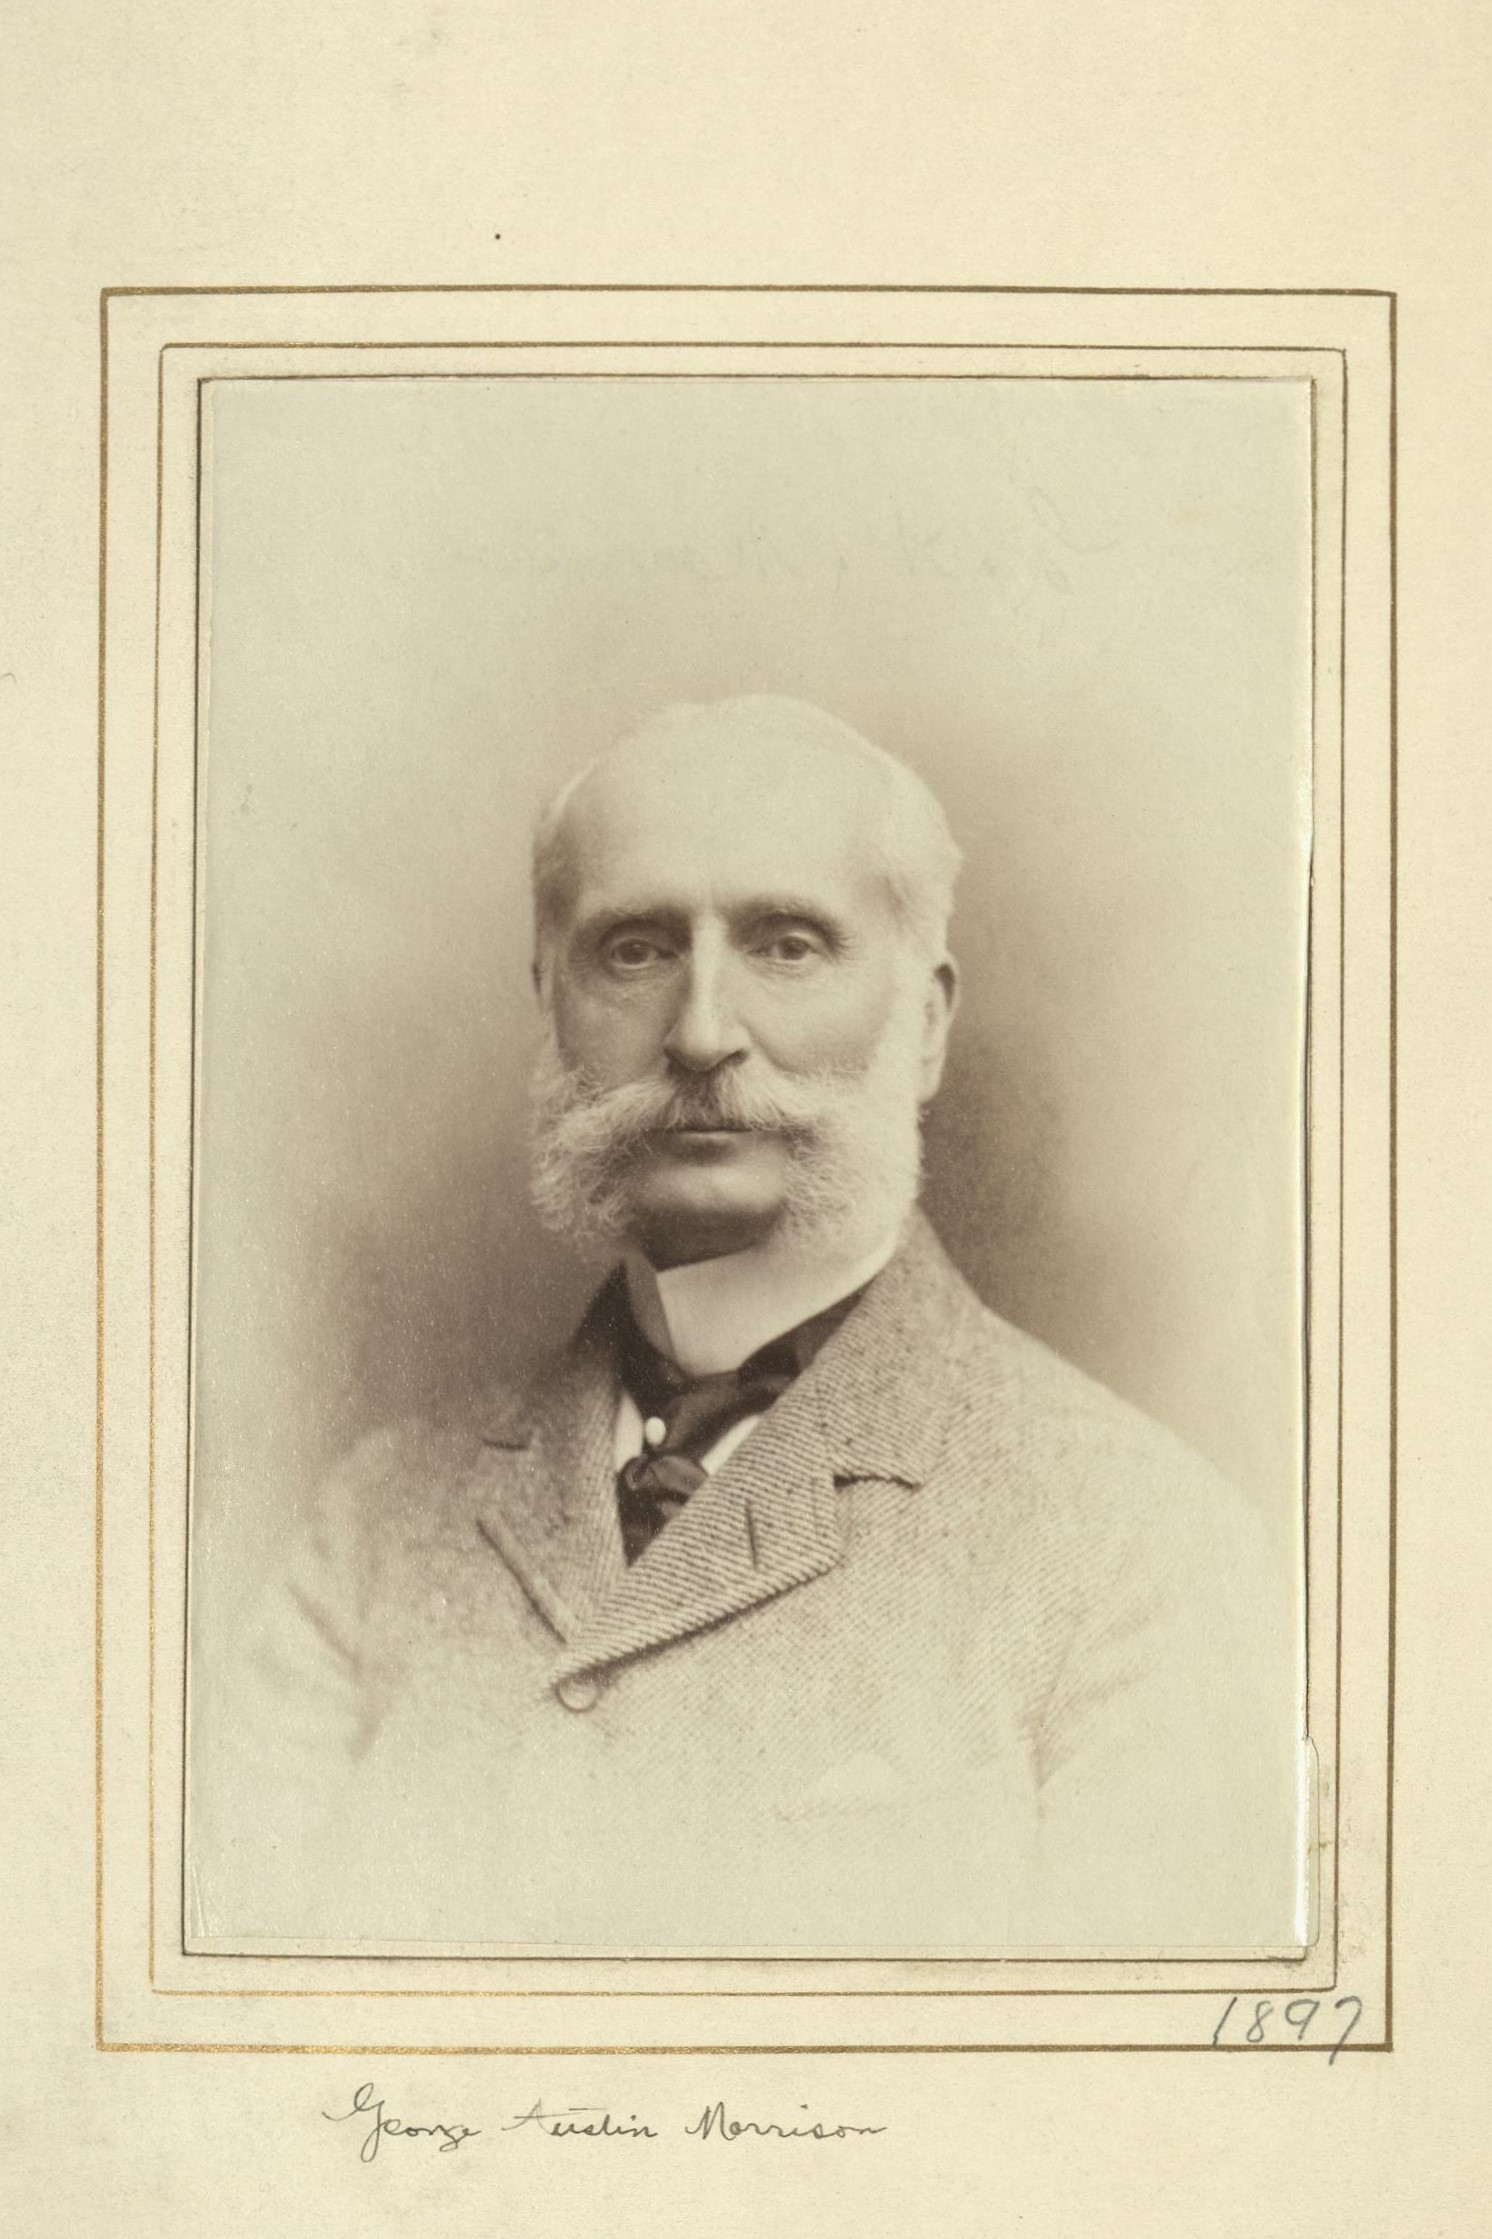 Member portrait of George Austin Morrison